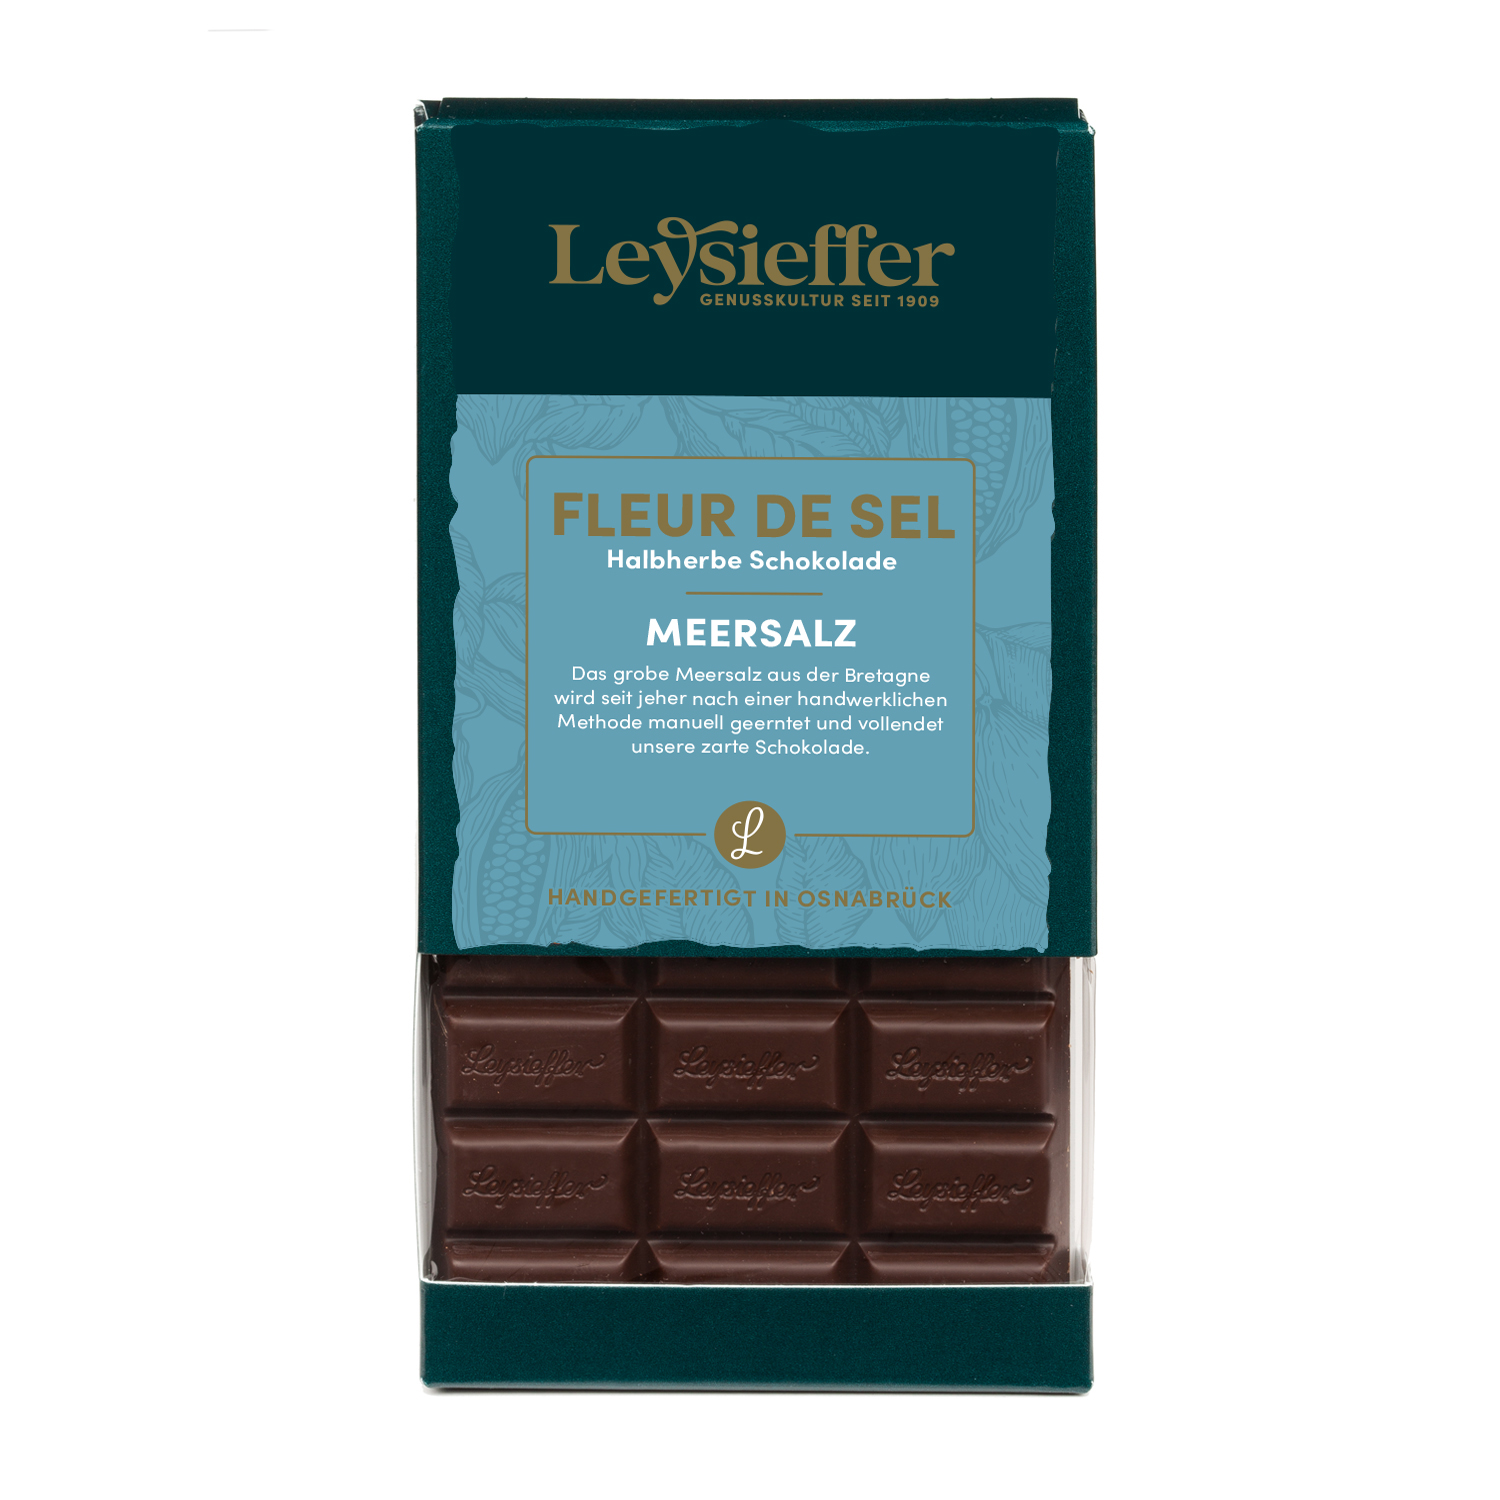 Semi-Sweet Chocolate with Sea Salt from the Bretagne